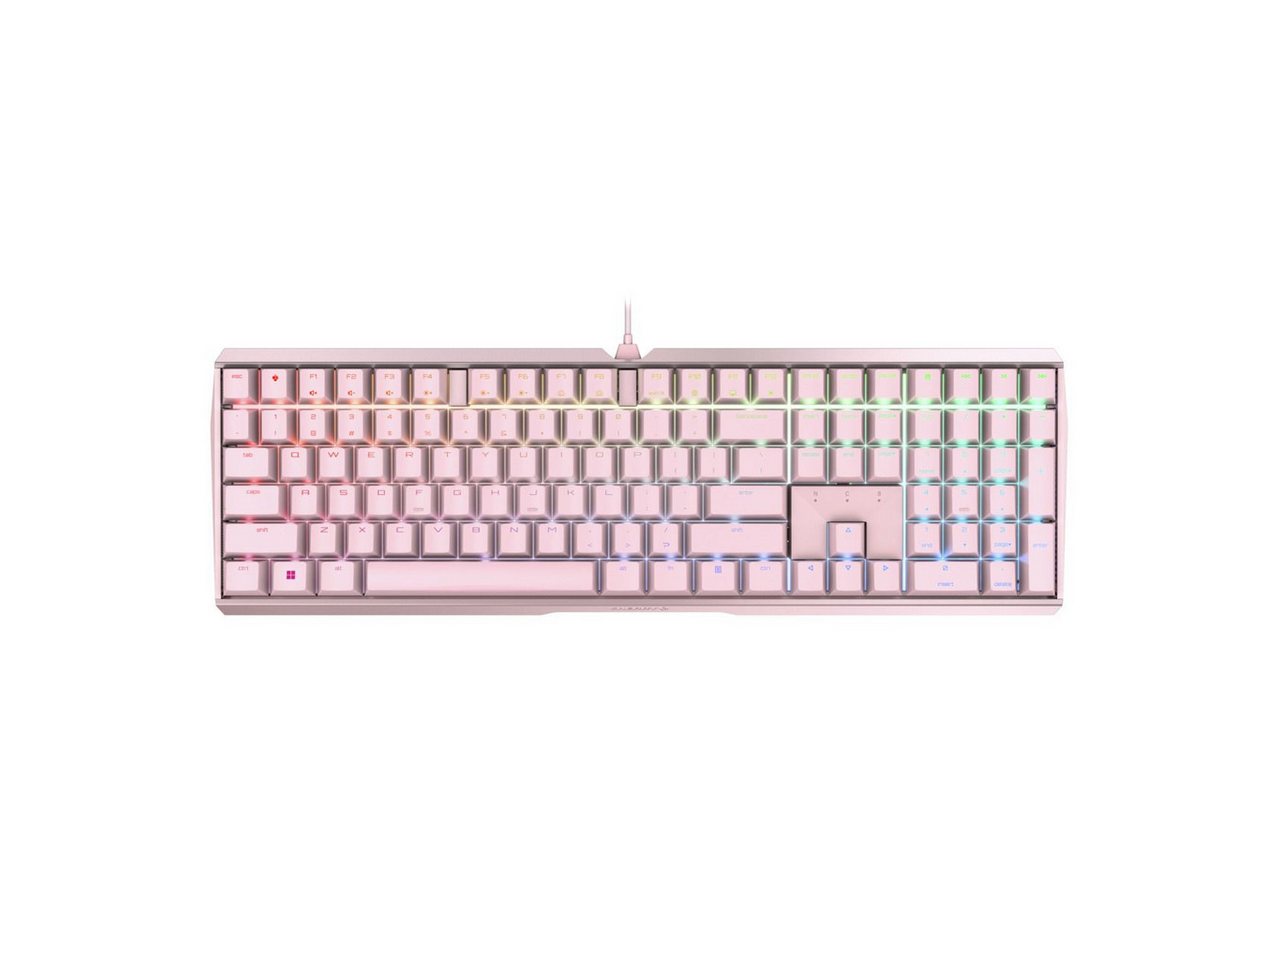 Cherry Cherry MX Board 3.0S Gaming RGB Tastatur, MX-Black, pink Gaming-Tastatur von Cherry